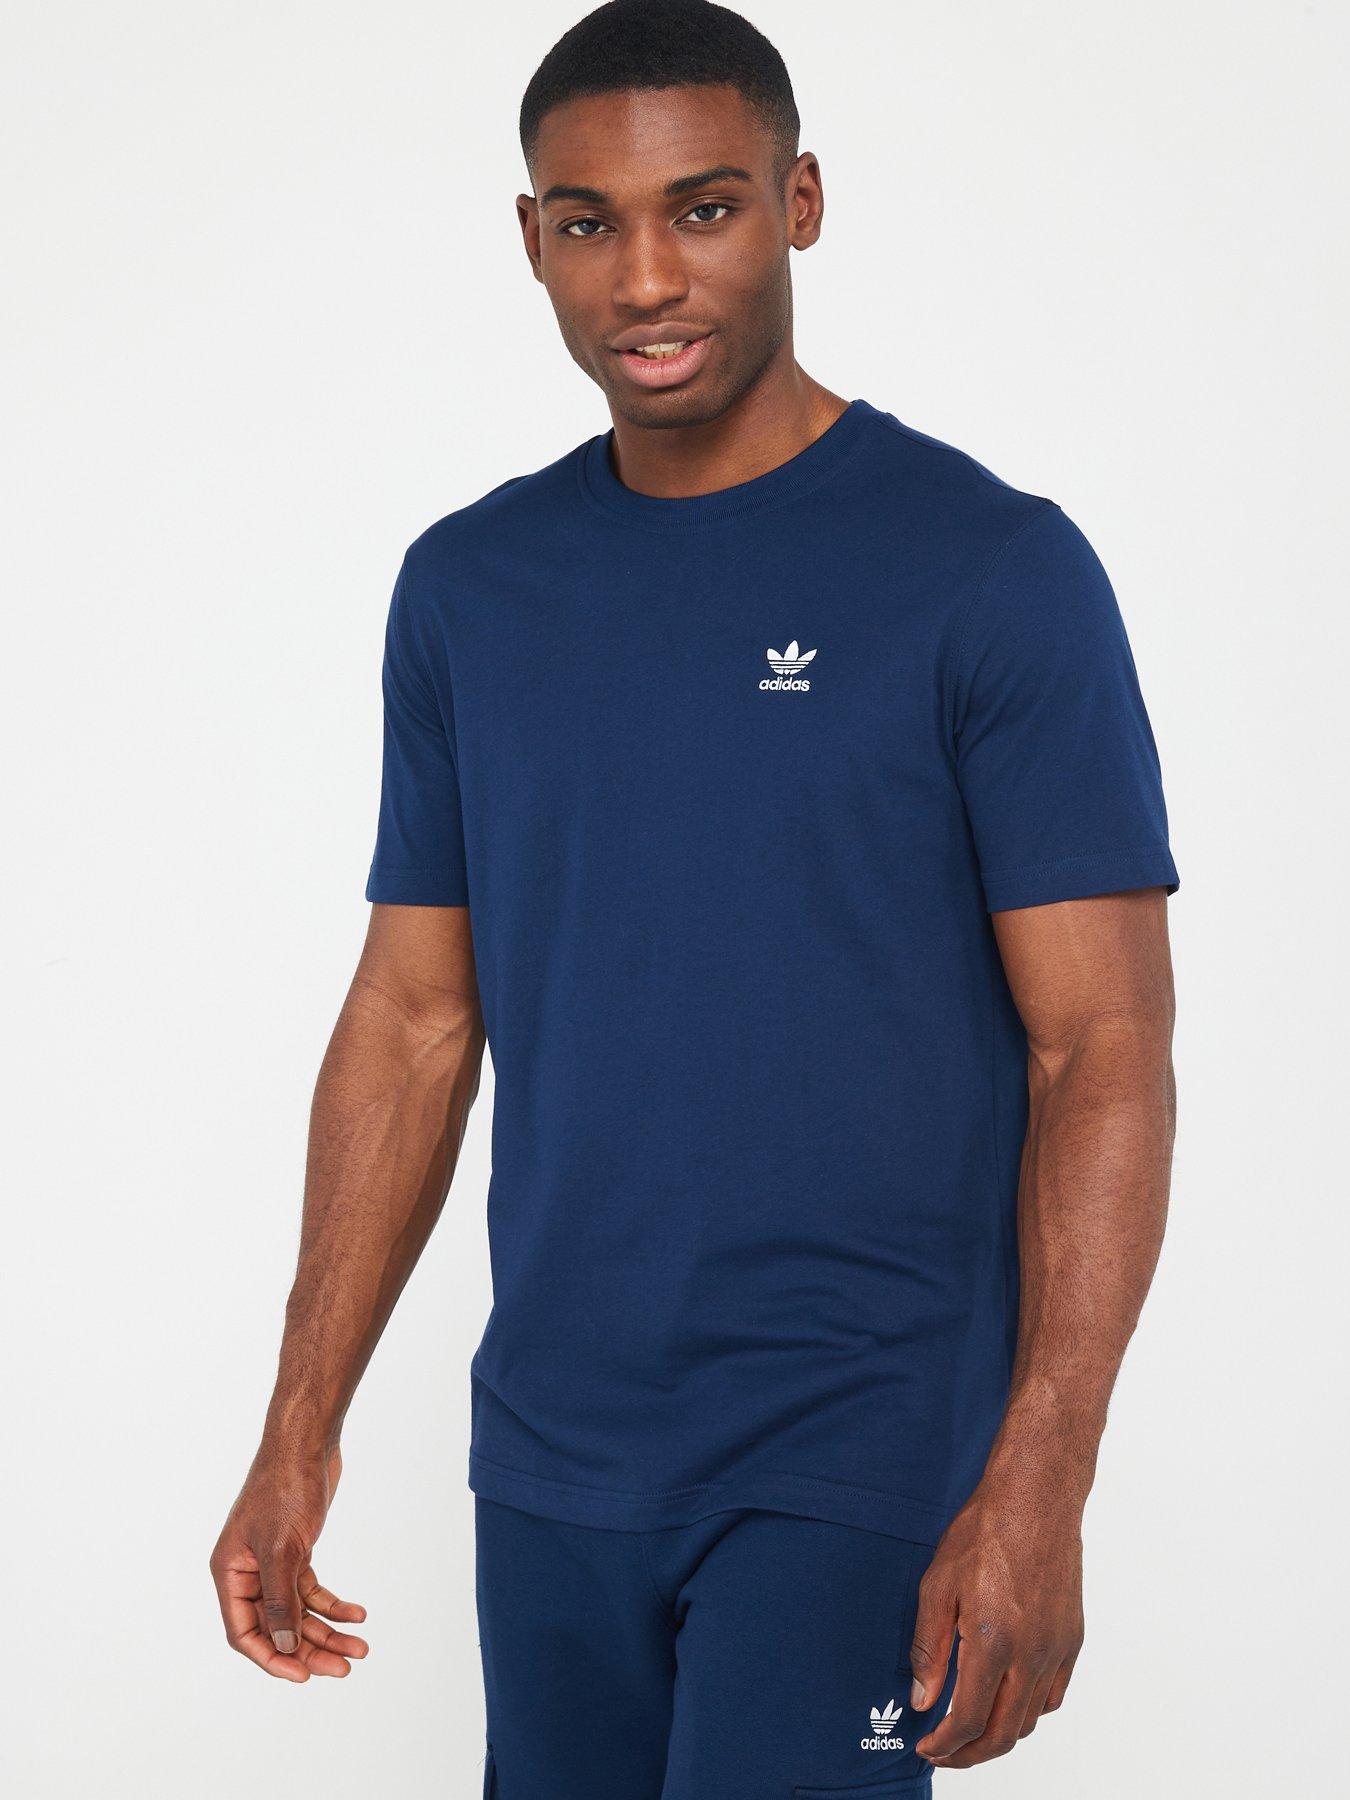 | T-shirts Men Adidas & | | originals Sportswear polos